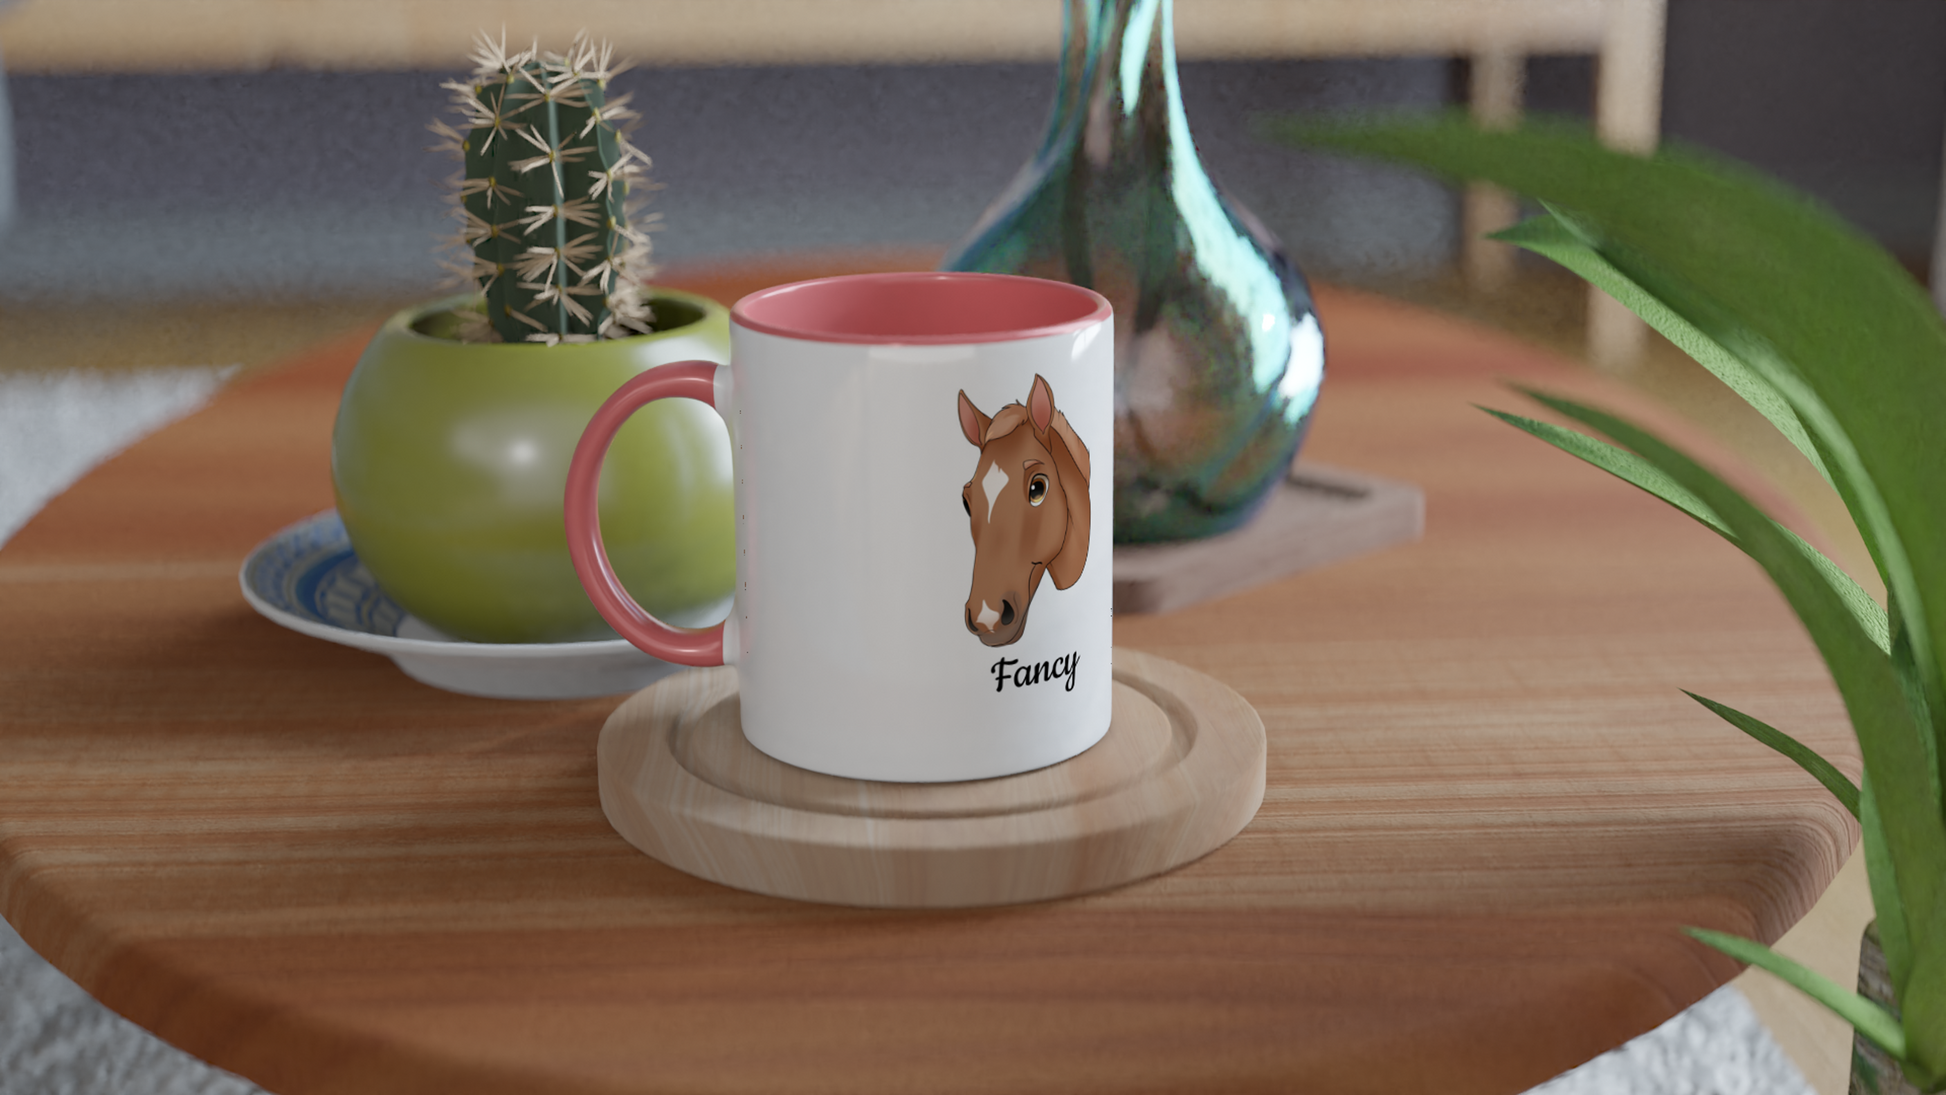 Hand Drawn Horse || 11oz Ceramic Mug with Color - Fairytale Cartoon - Hand Drawn & Personalized; Hand drawn & personalized with your horse